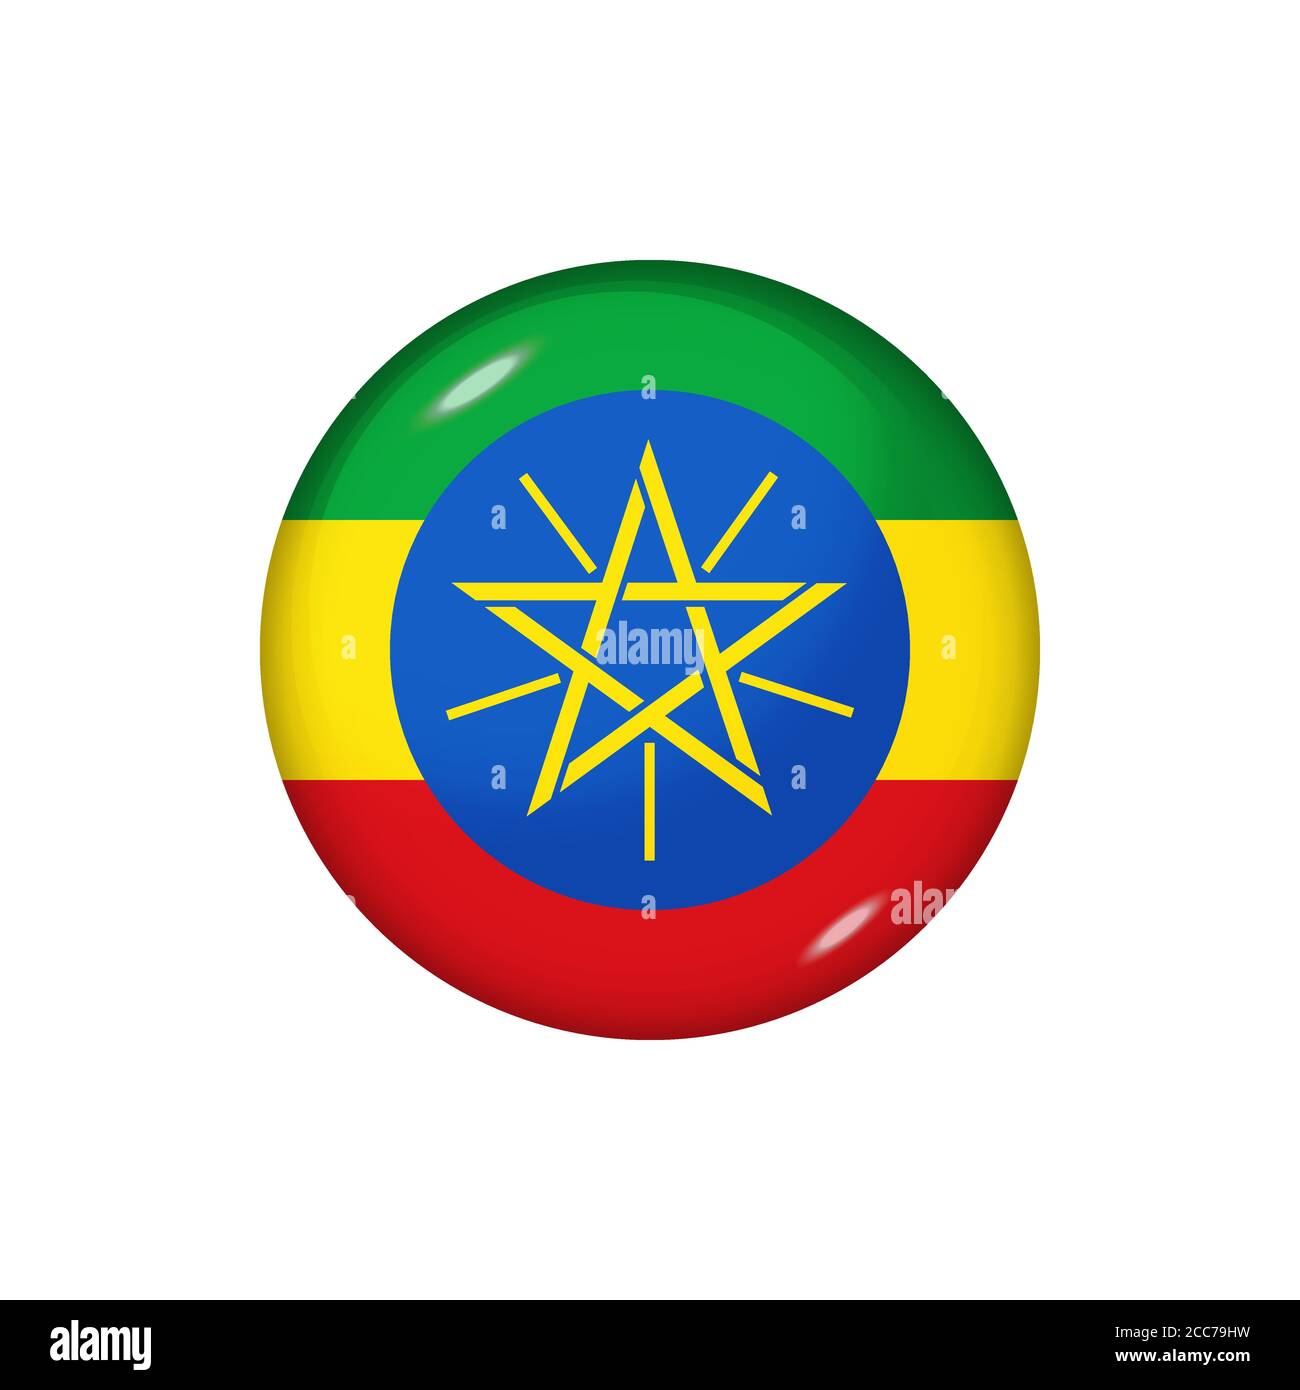 https://c8.alamy.com/comp/2CC79HW/icon-flag-of-ethiopia-round-glossy-flag-vector-illustration-eps-10-2CC79HW.jpg